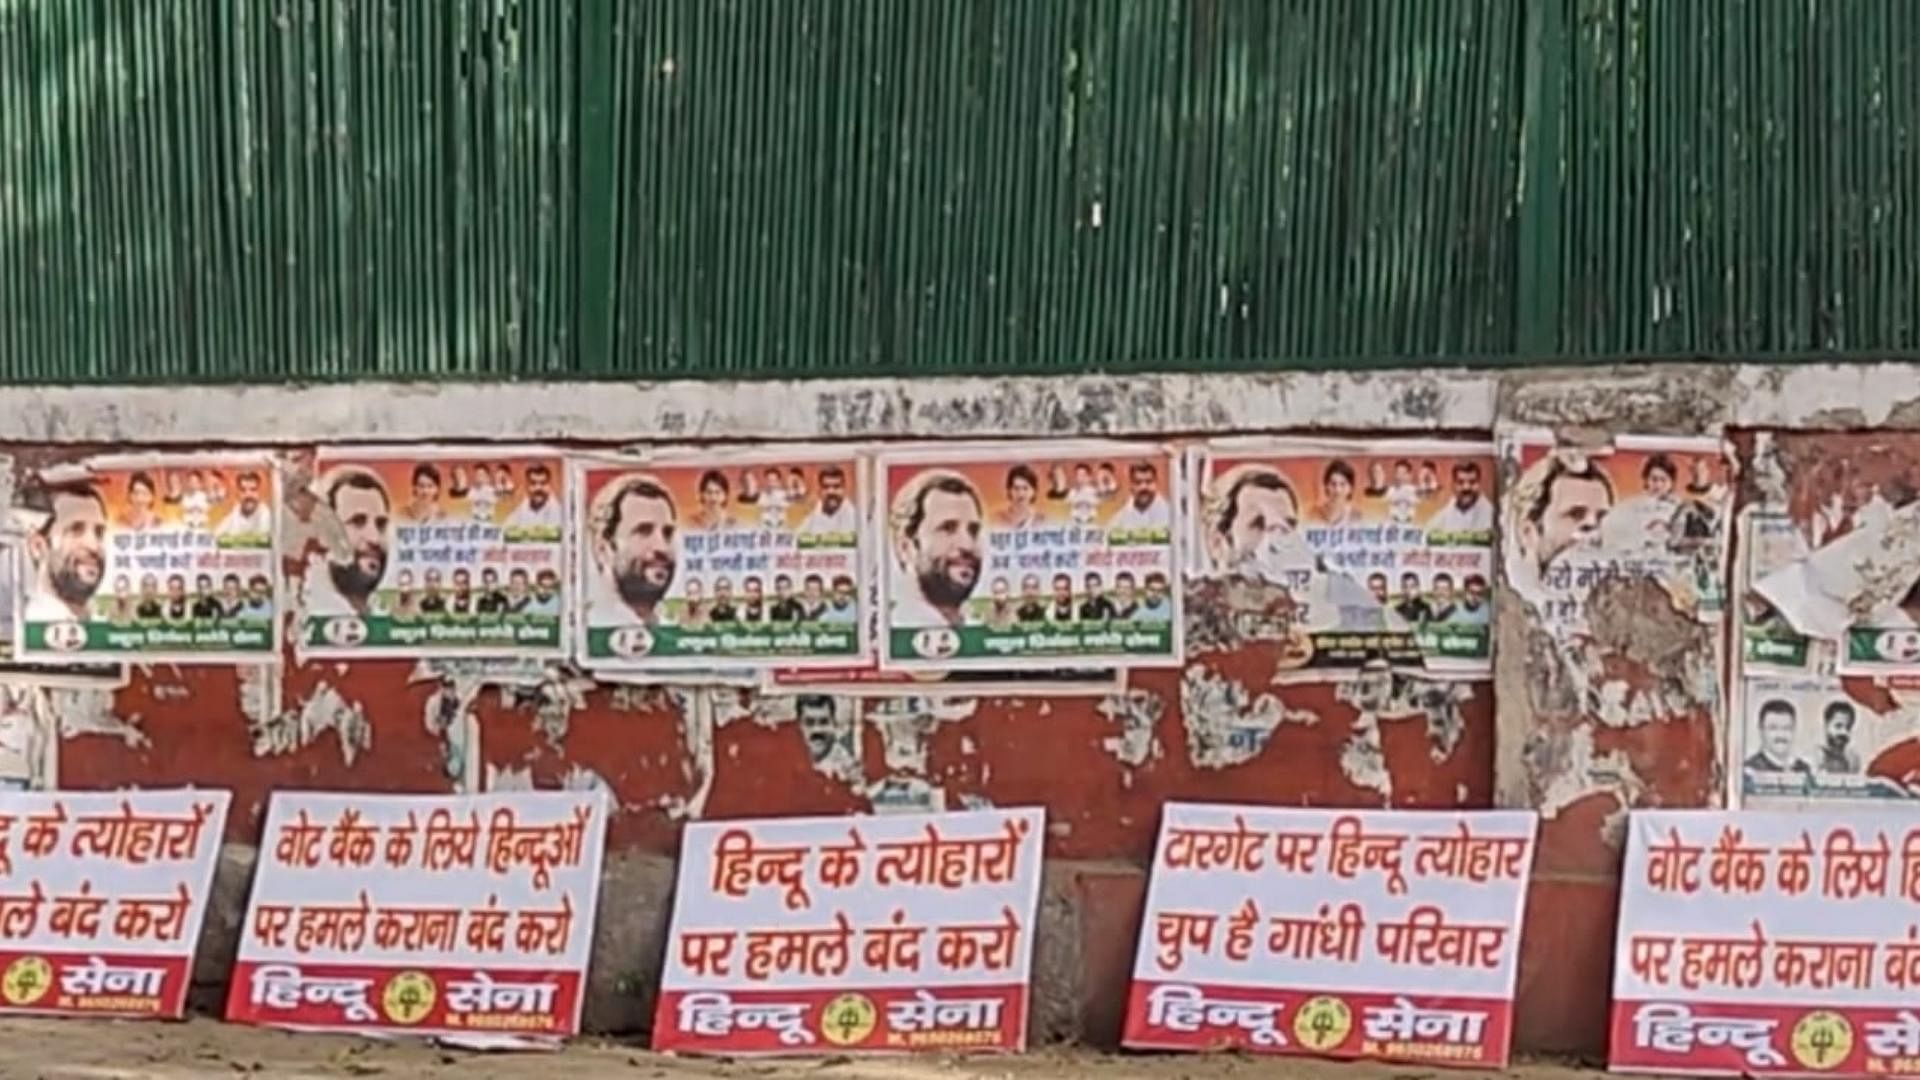 <div class="paragraphs"><p>Hindu Sena members put up posters outside Congress headquarters.&nbsp;</p></div>